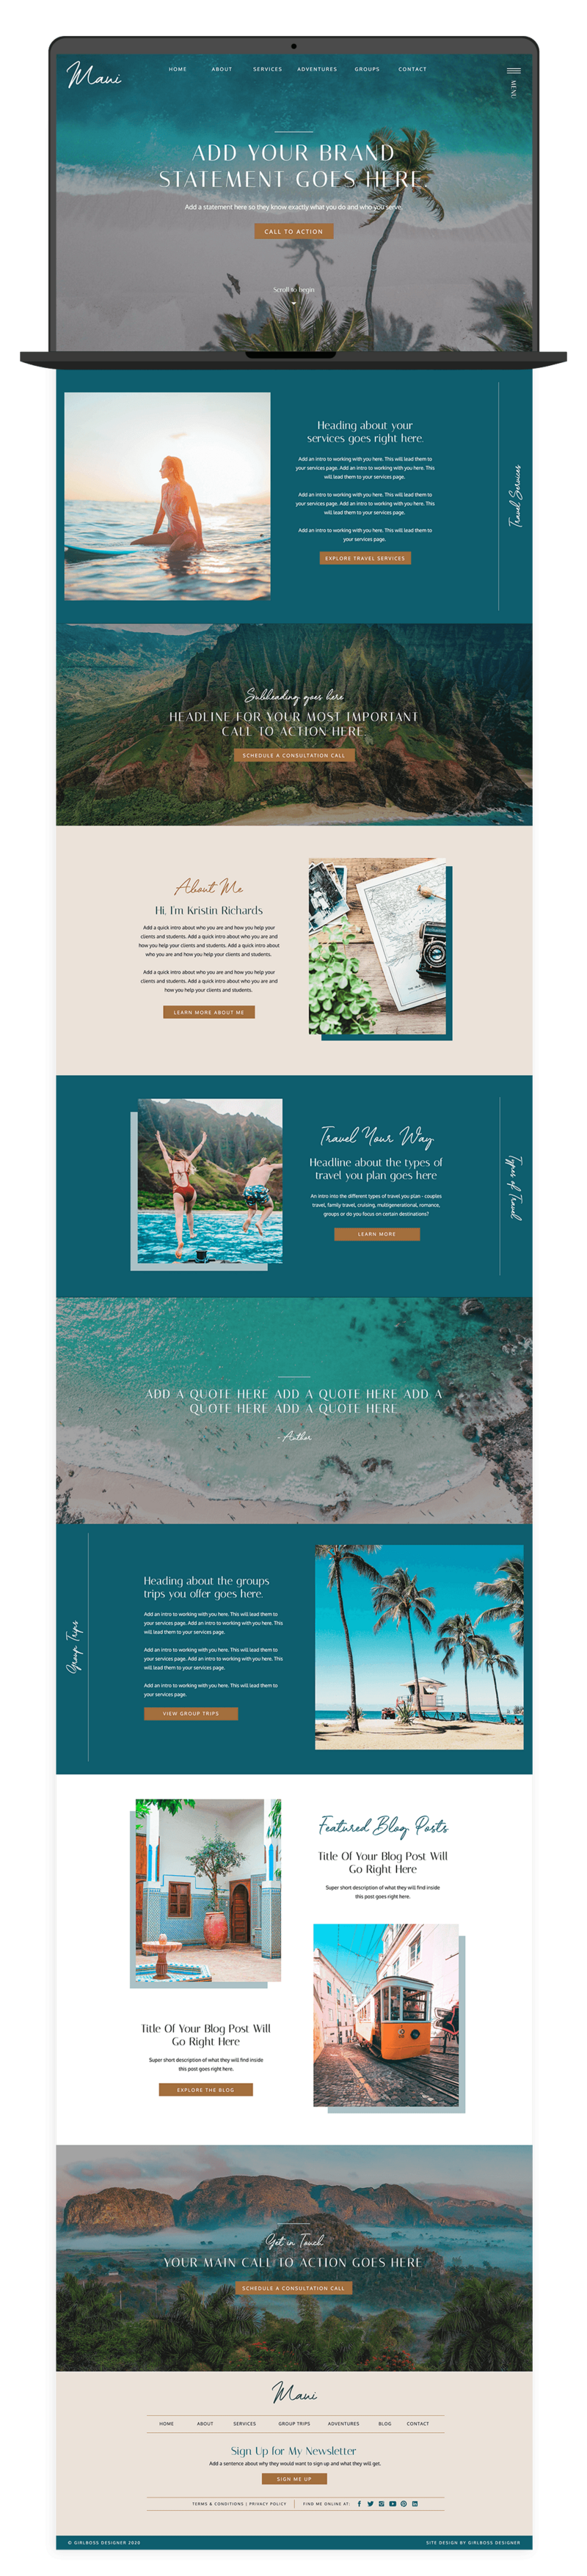 GBD Maui Travel-Macbook Mockup FULL